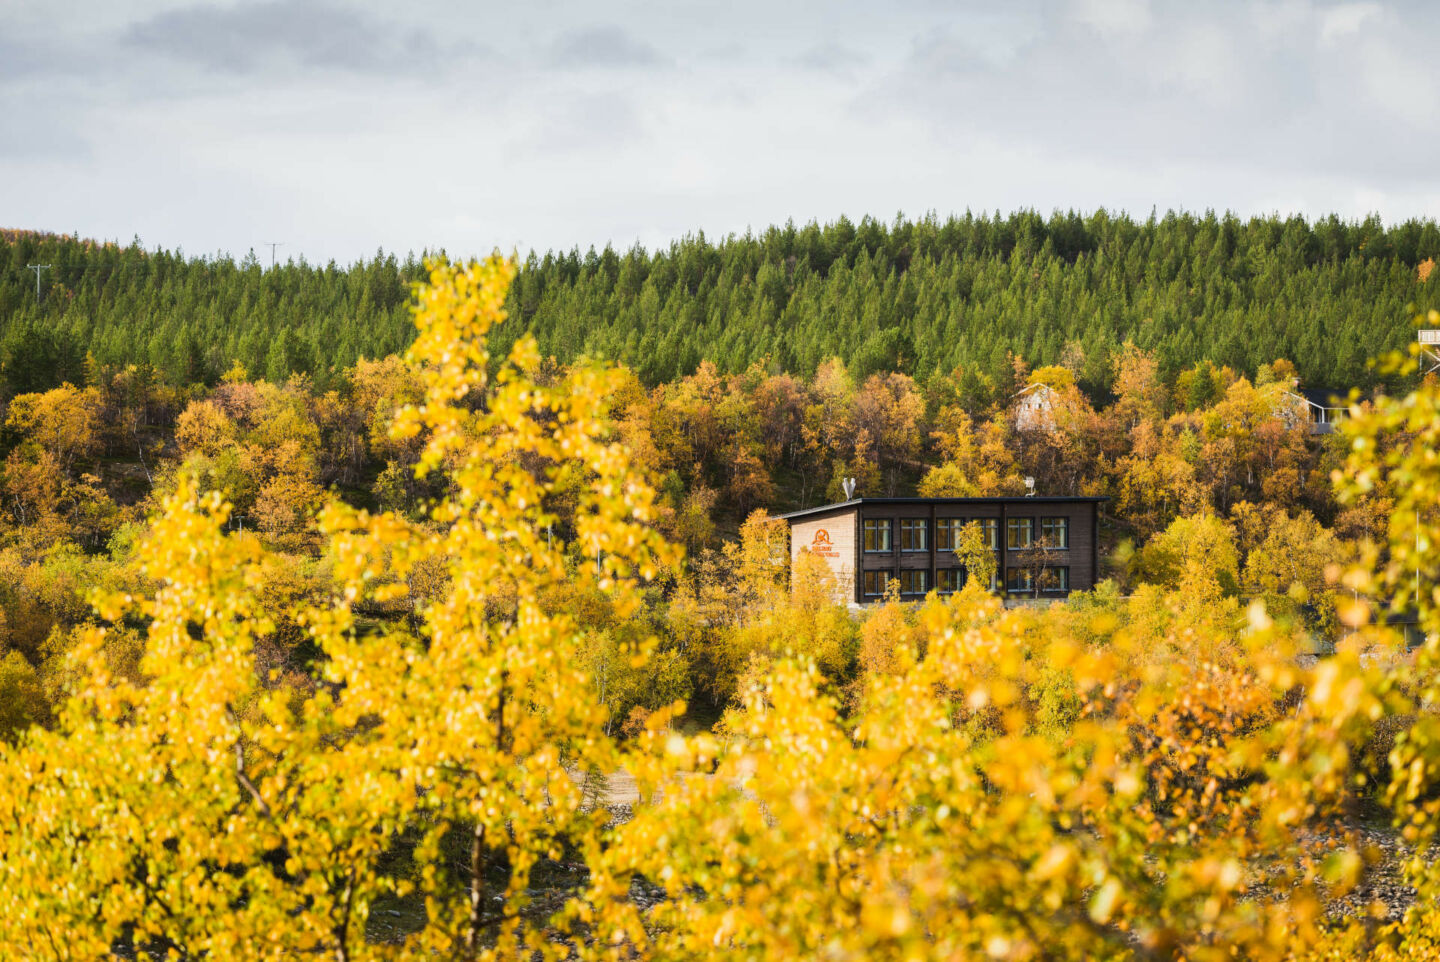 Hotel in autumn in Utsjoki, Finland